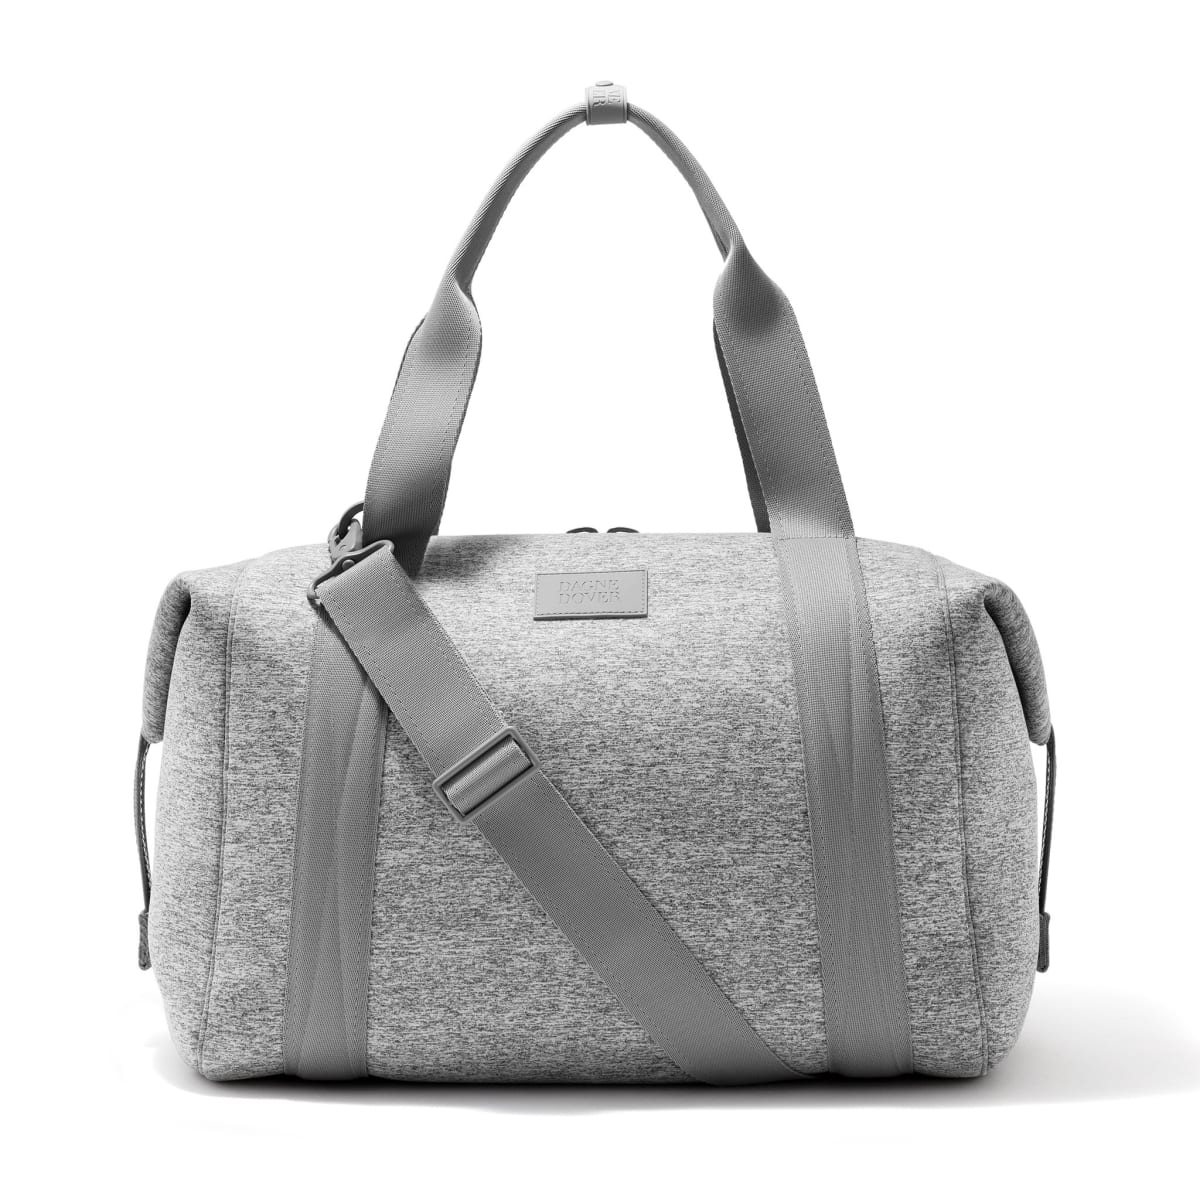 This Roomy, Lightweight Bag Is Steph's Favorite Travel Sidekick